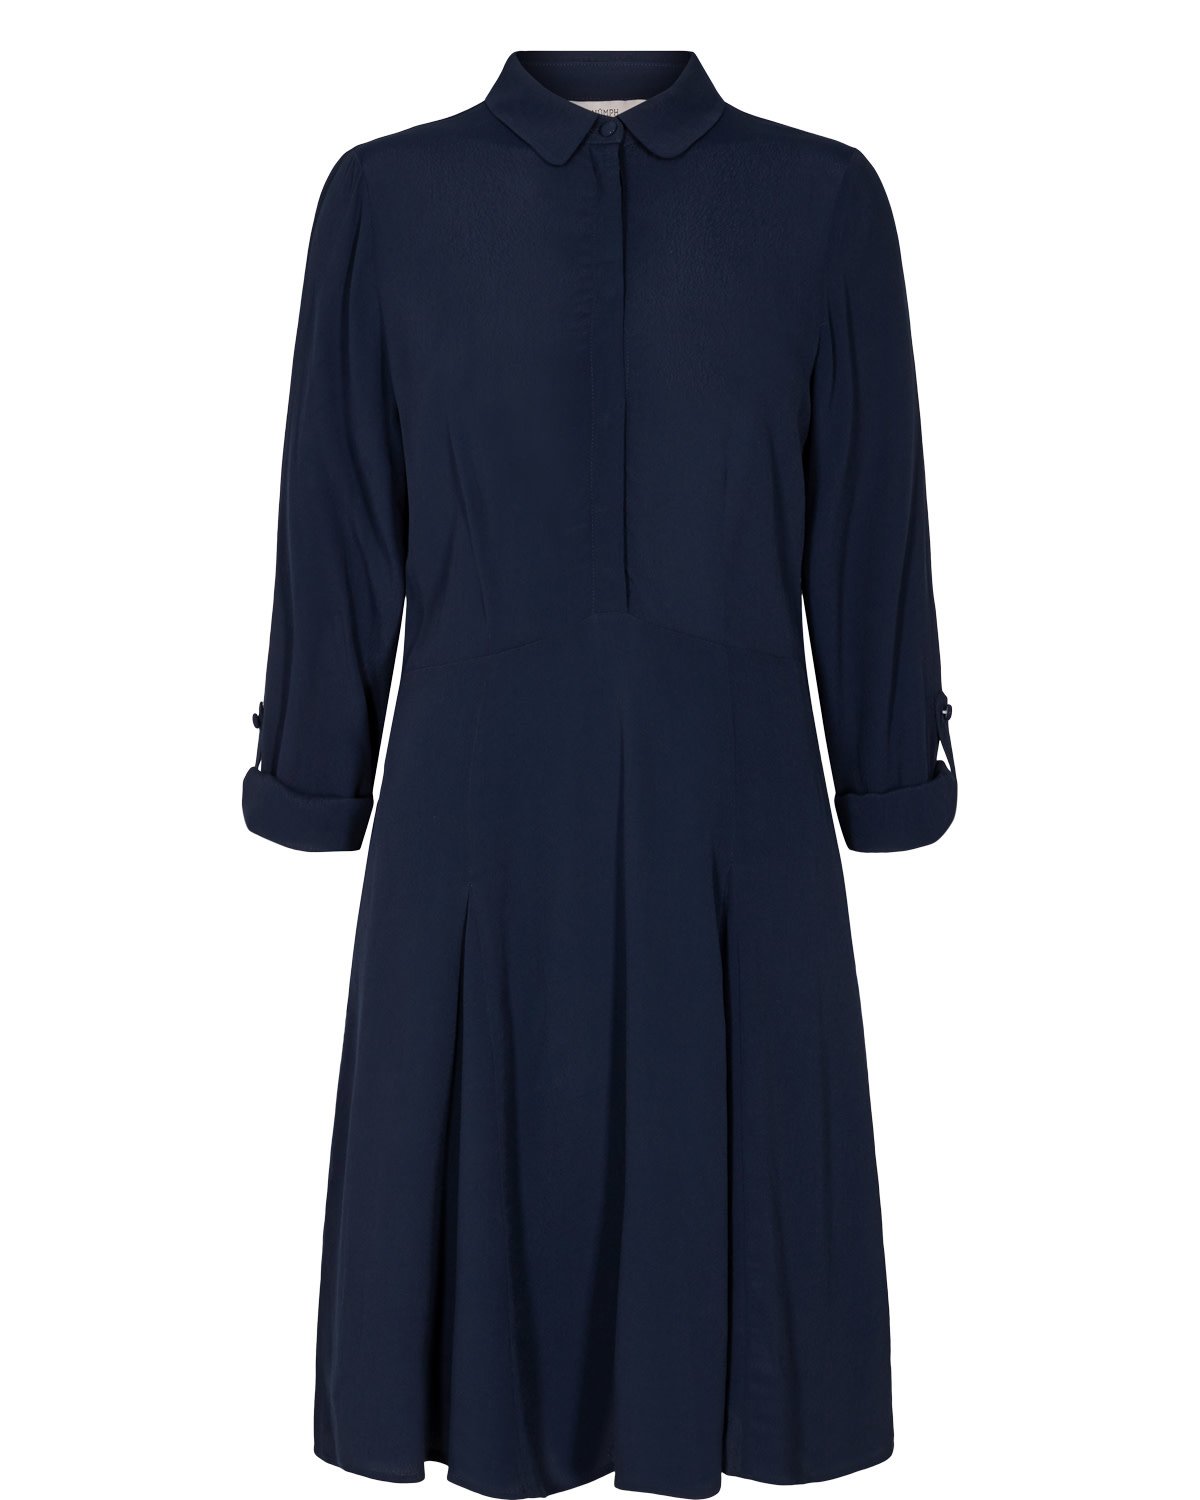 Nümph Delsia Dress NOOS - Donkerblauw